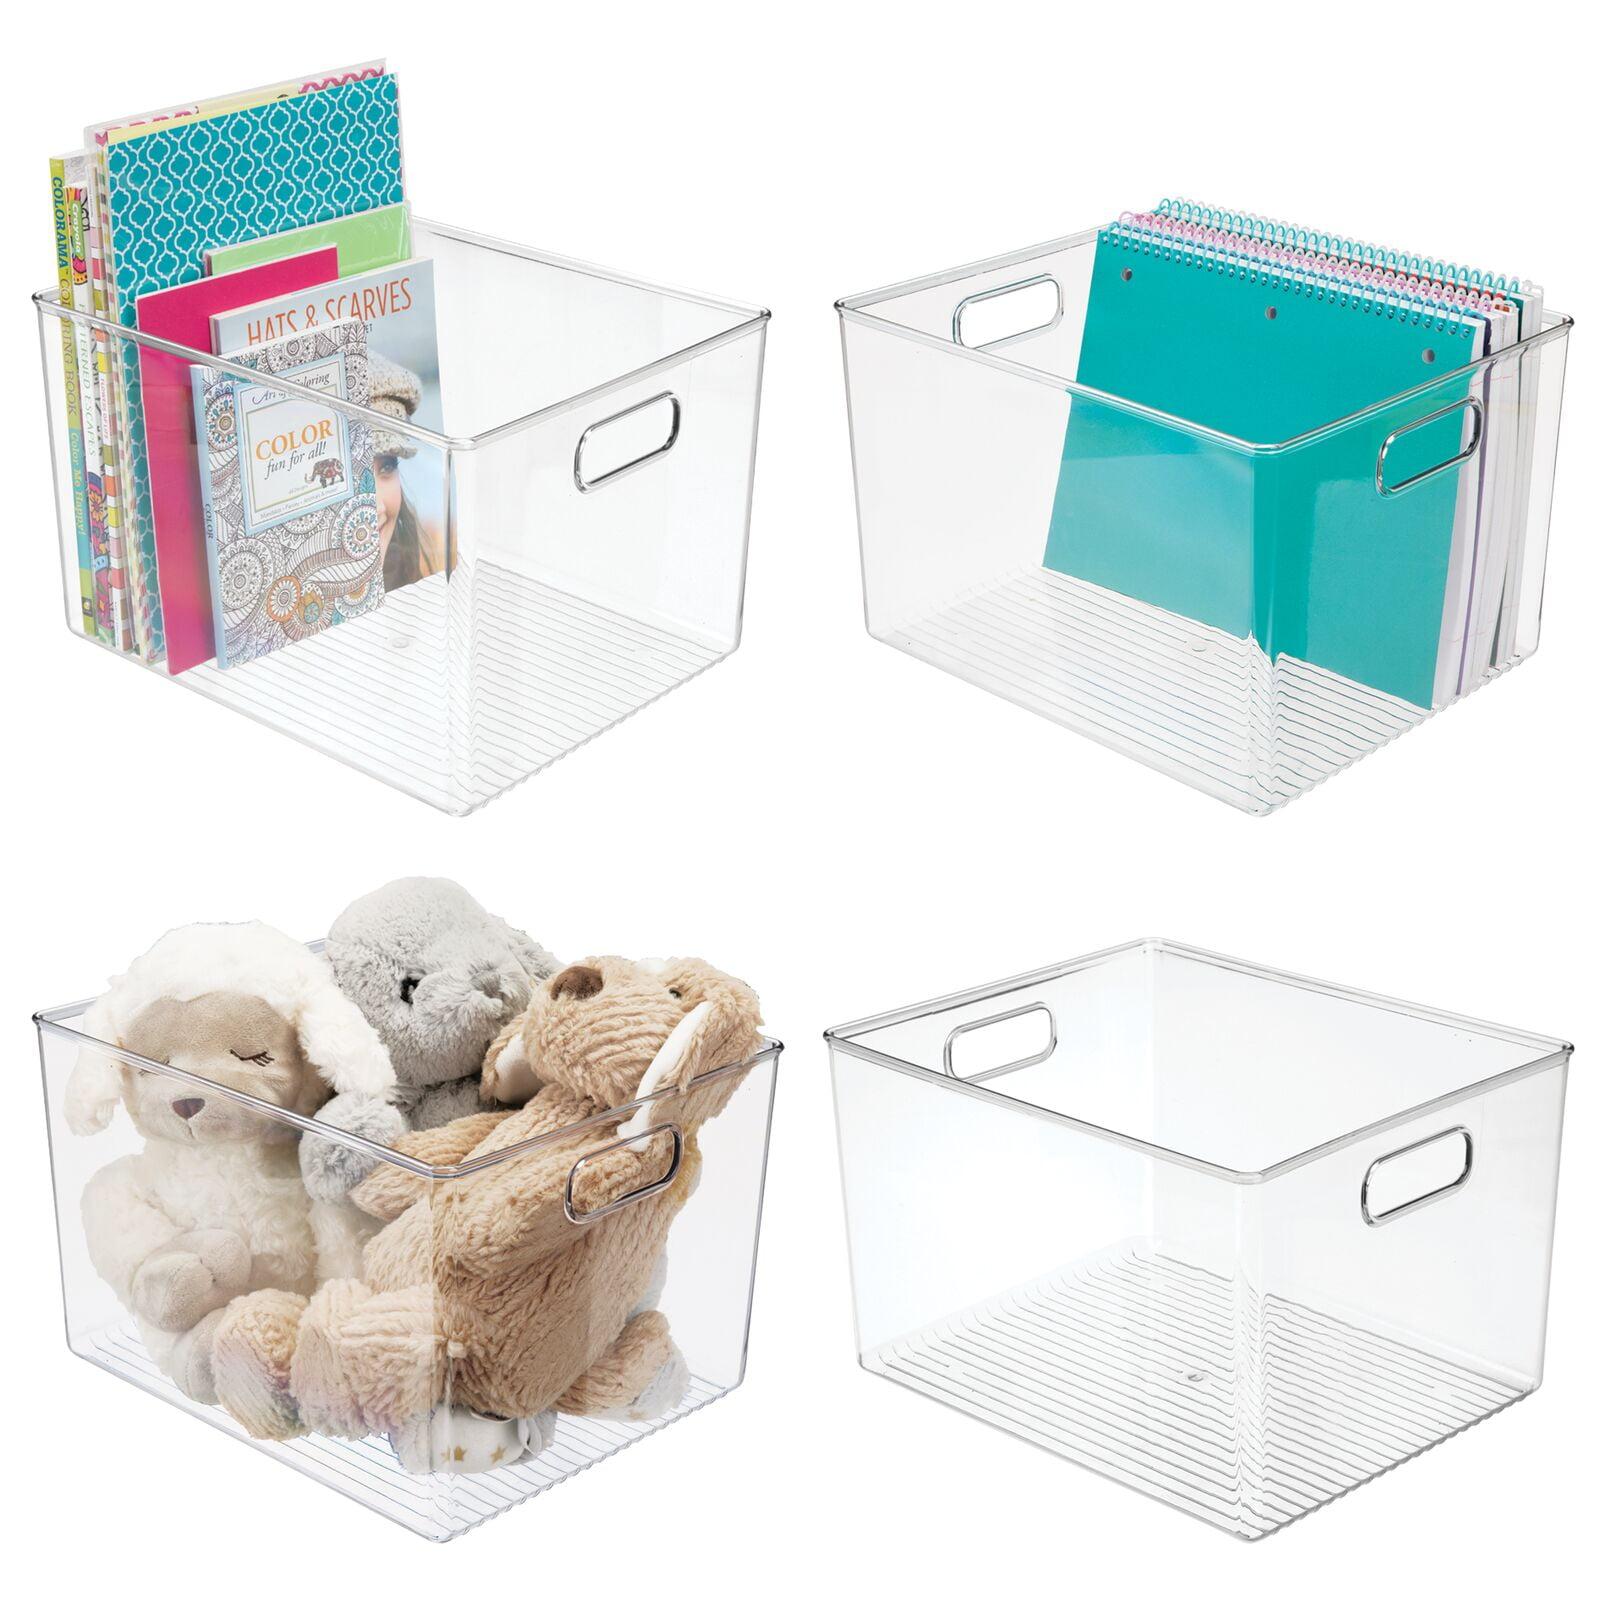 ClearPlay Kids' Cube Storage Organizer Bin, 12"x10"x16", 4-Pack